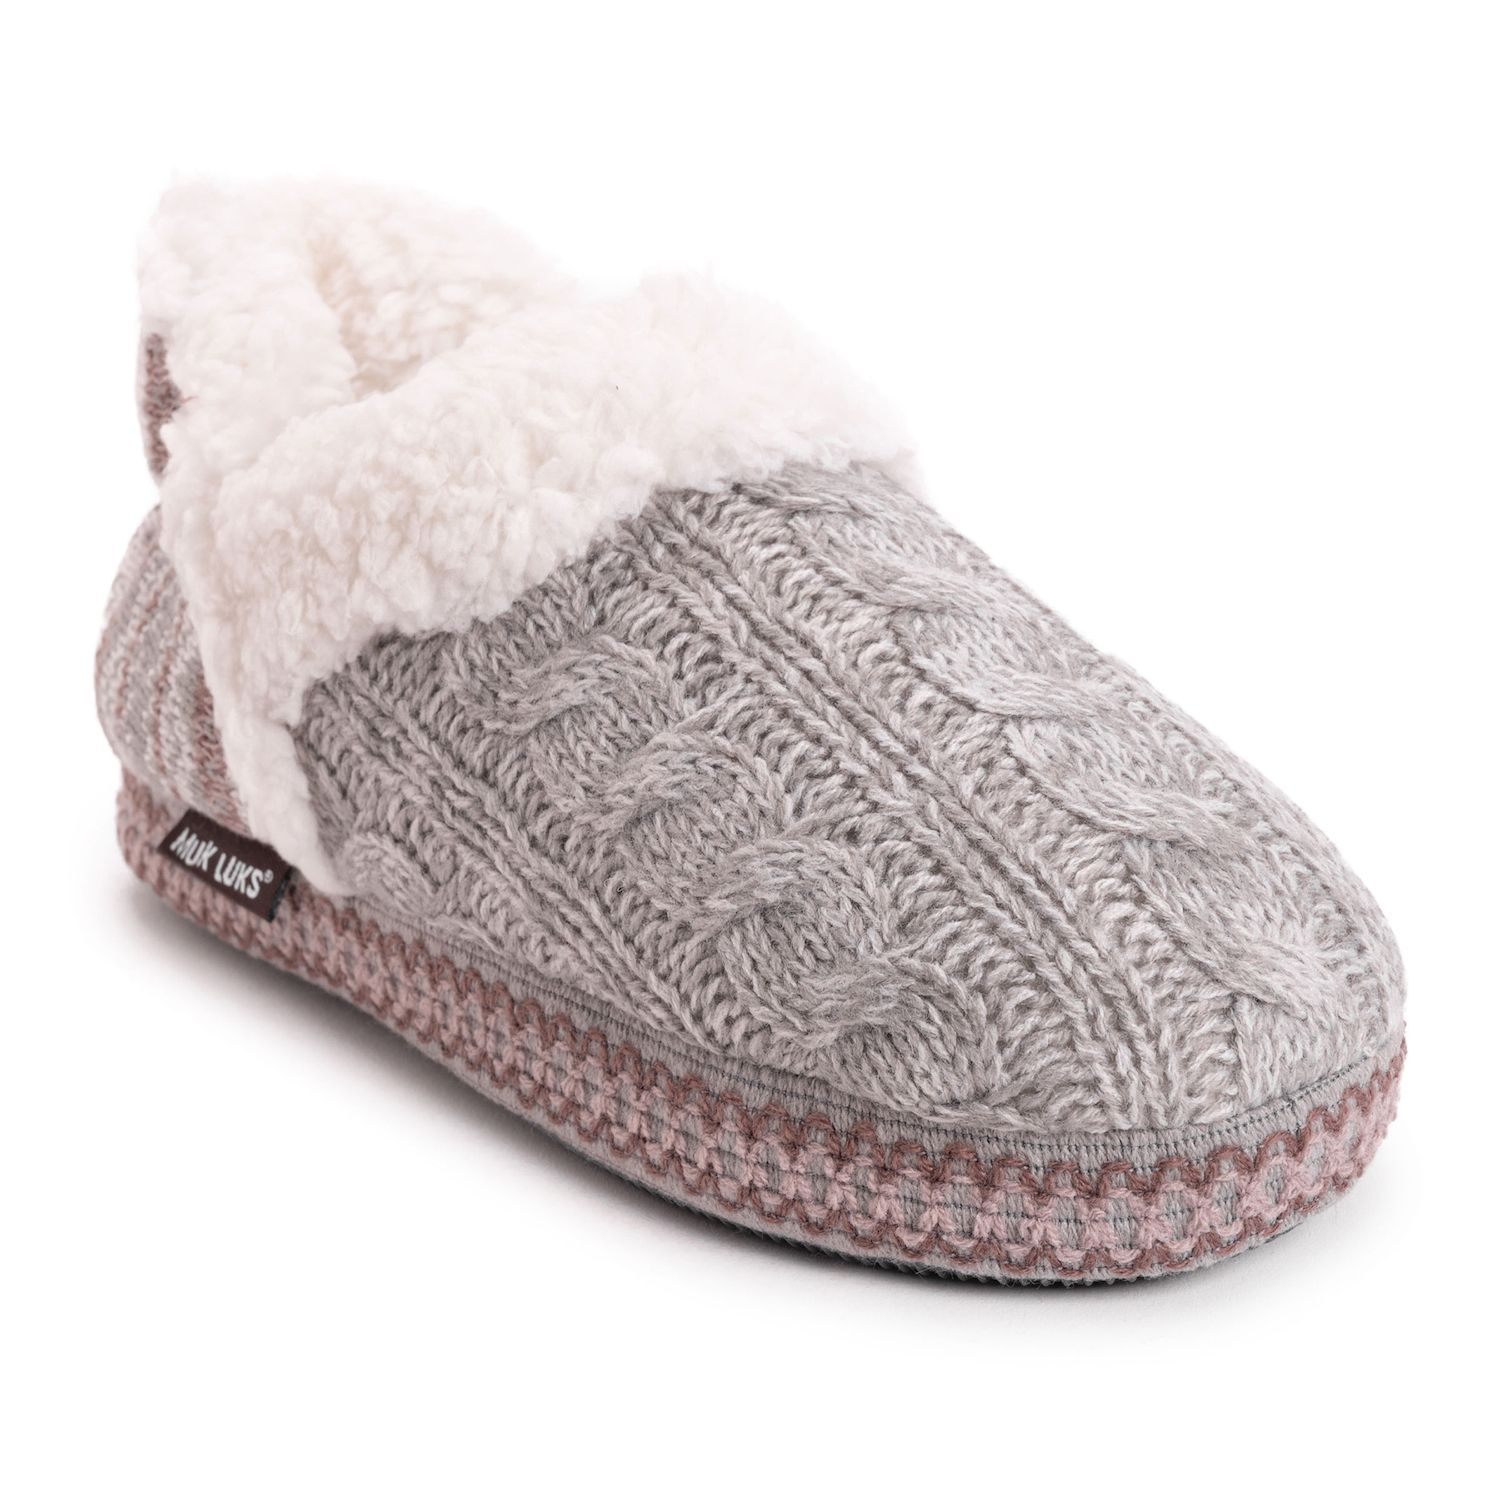 Grey MUK LUKS Slippers - Shoes | Kohl's